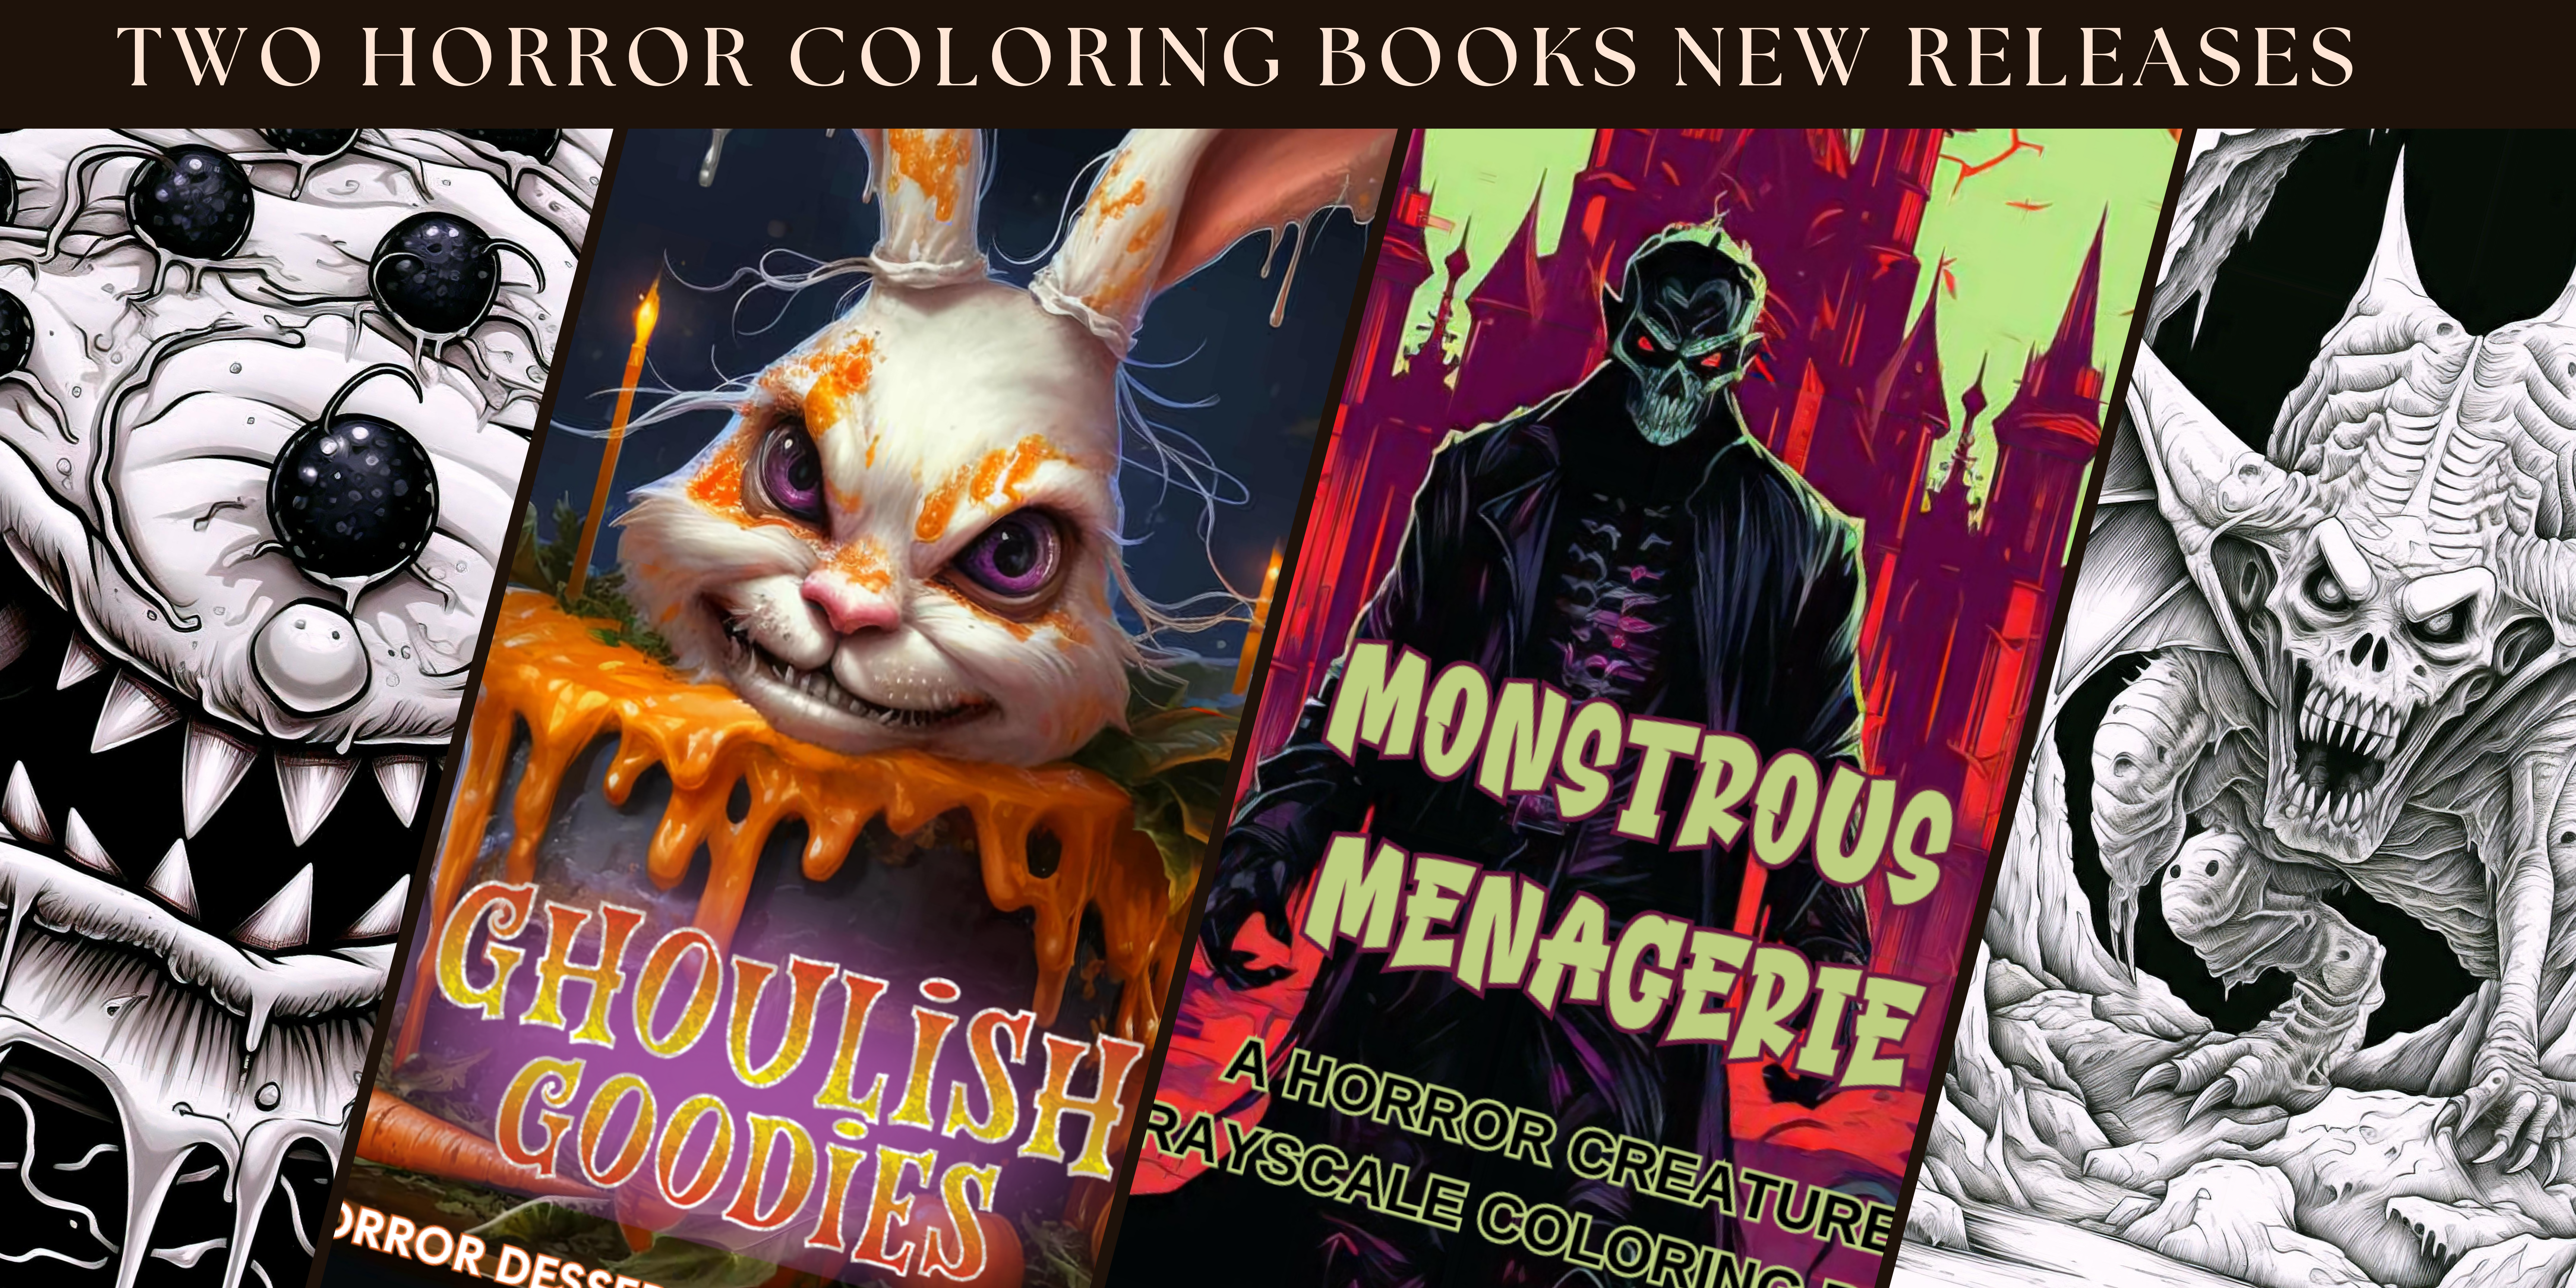 ND Jones Black Fantasy Author Halloween Coloring Books